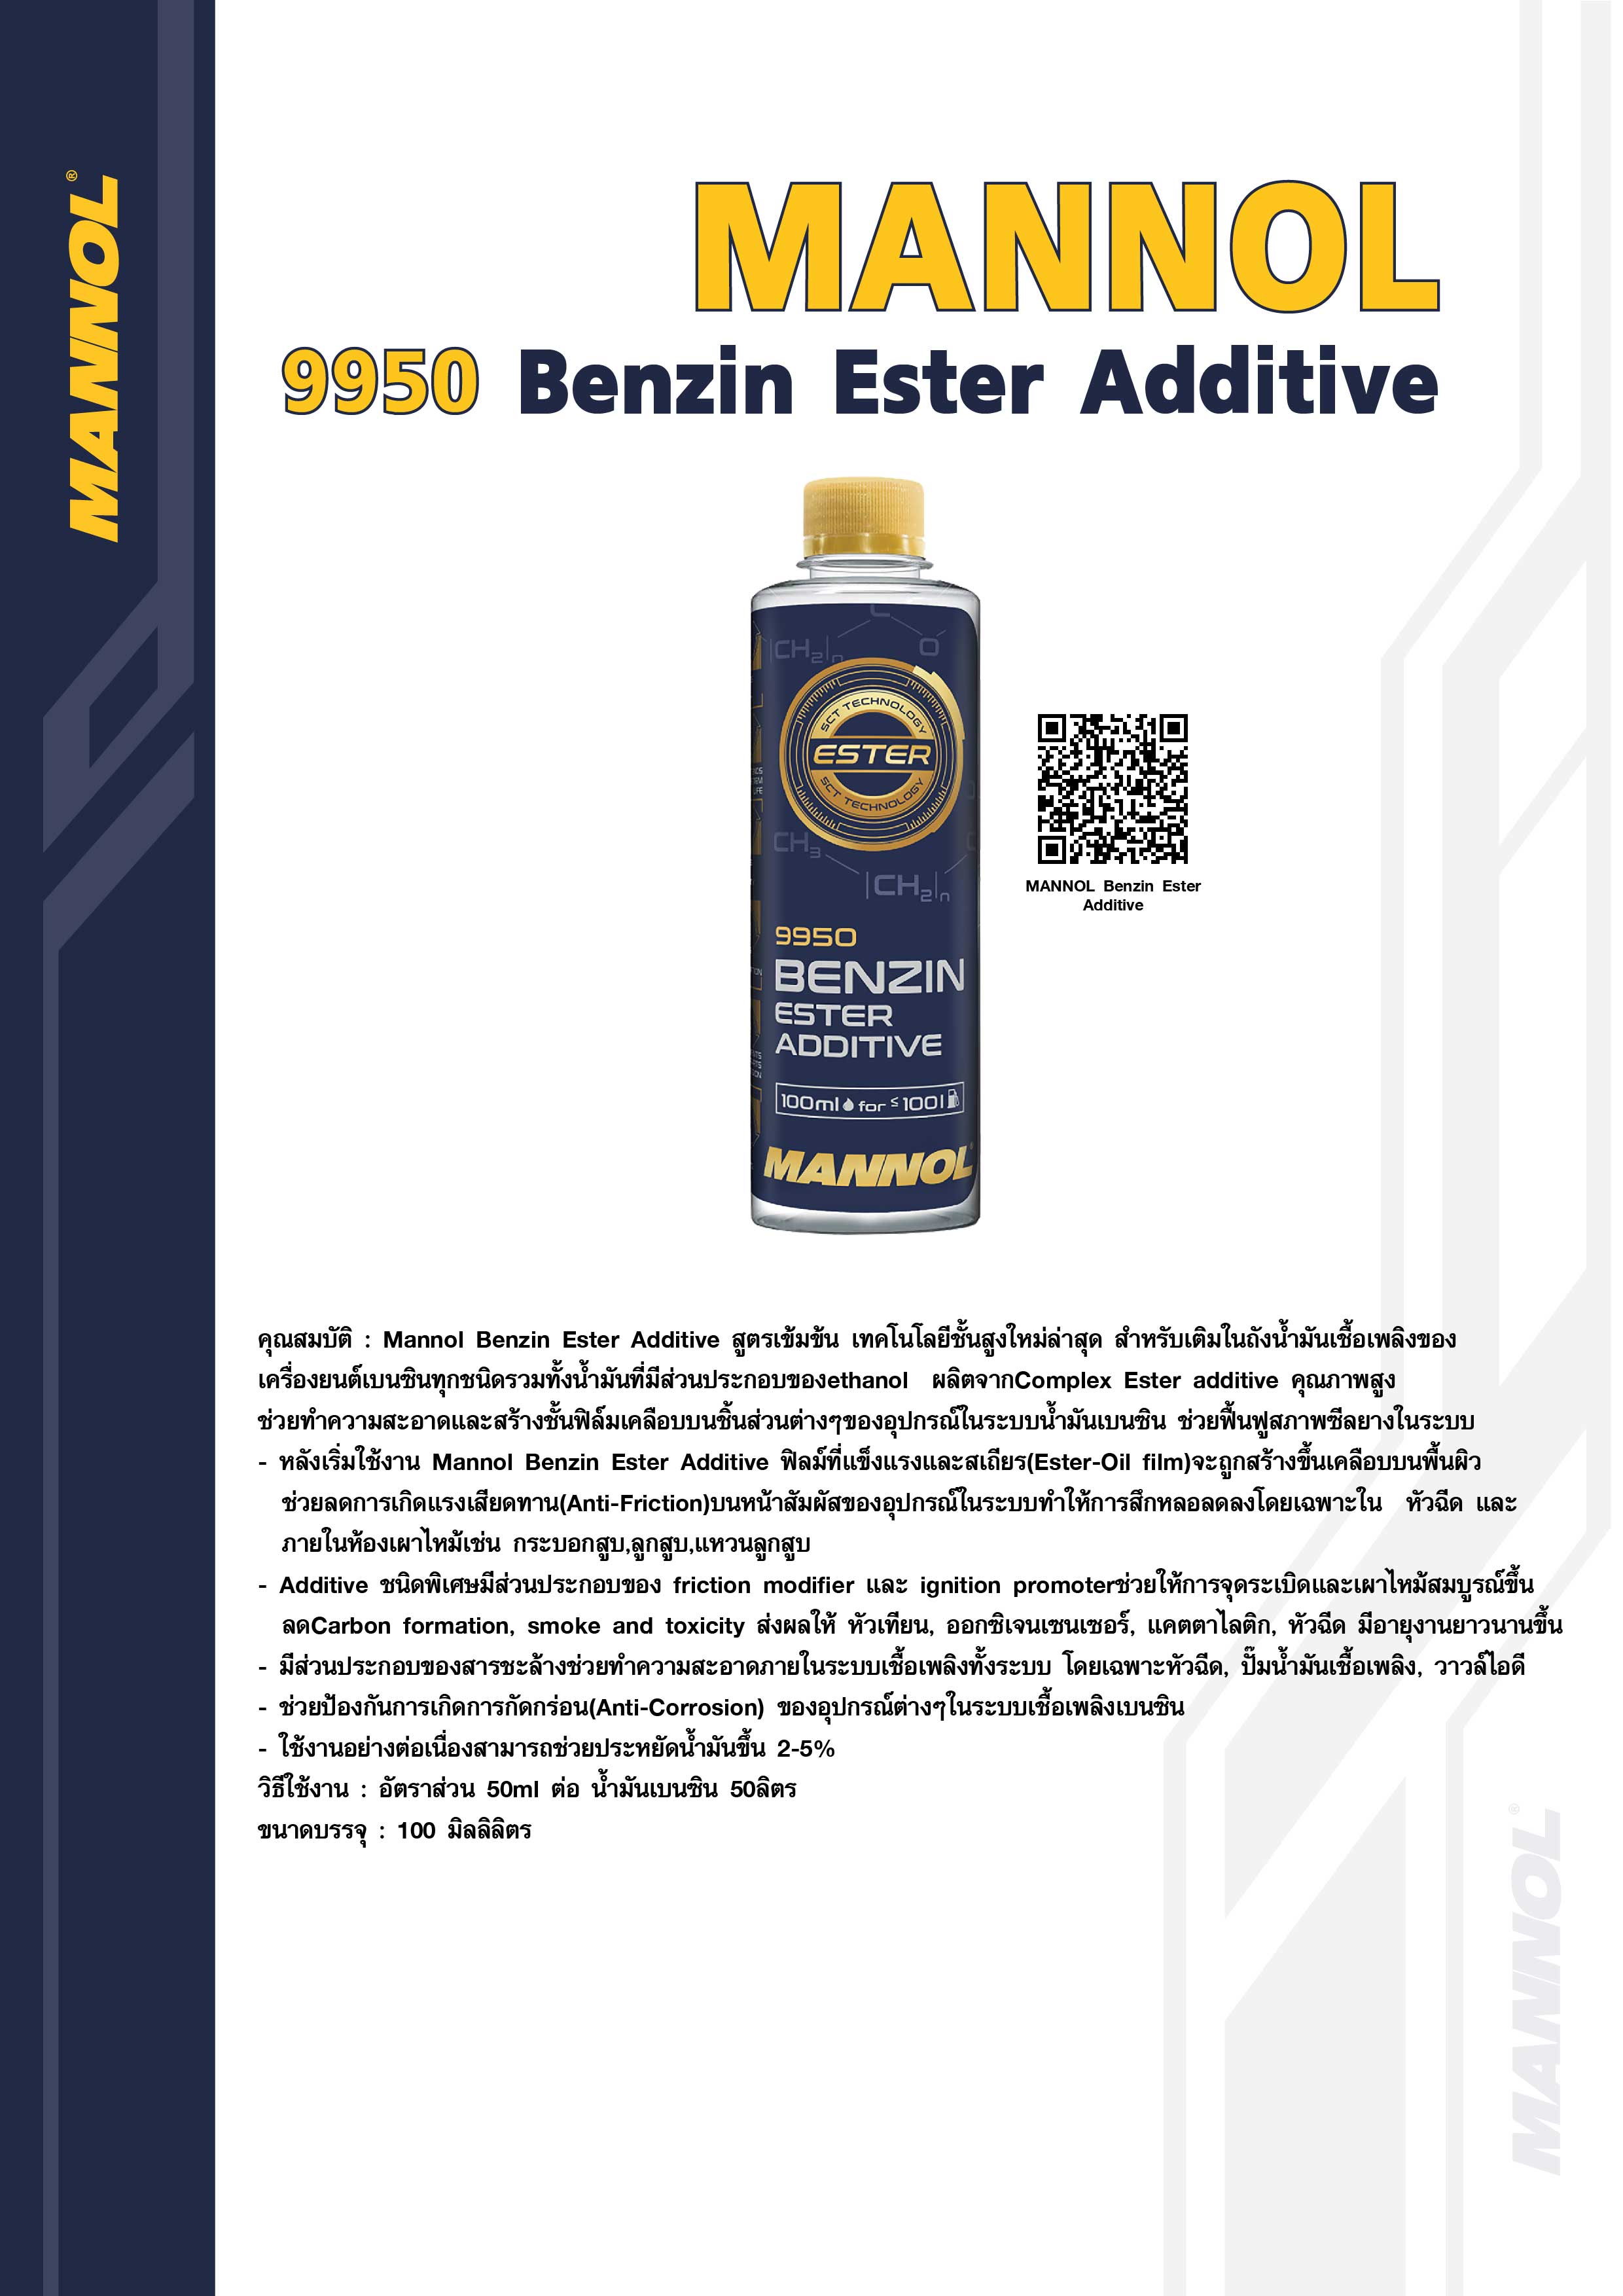 Mannol Benzin Ester Additive